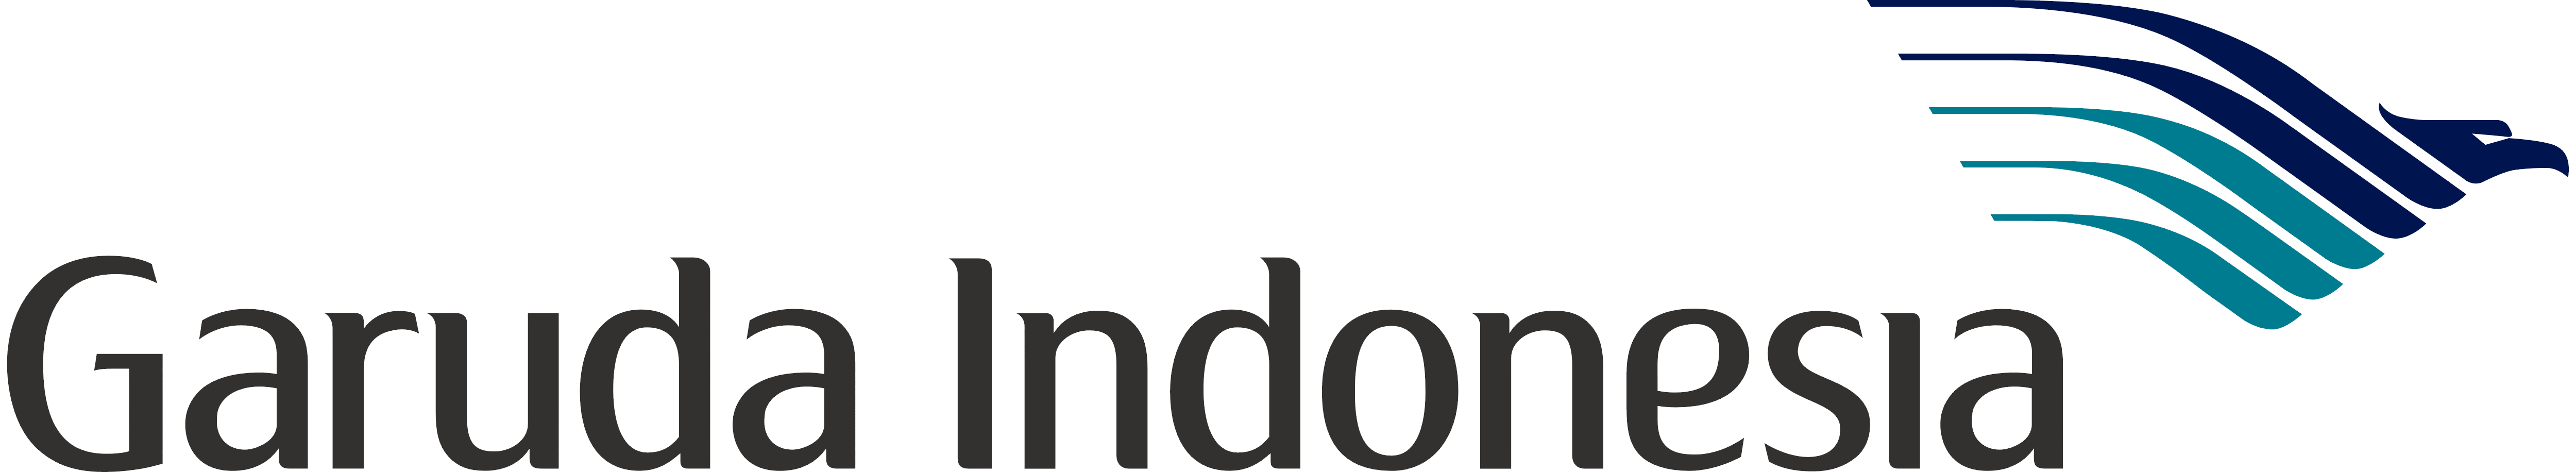 Garuda Indonesia – Logos Download